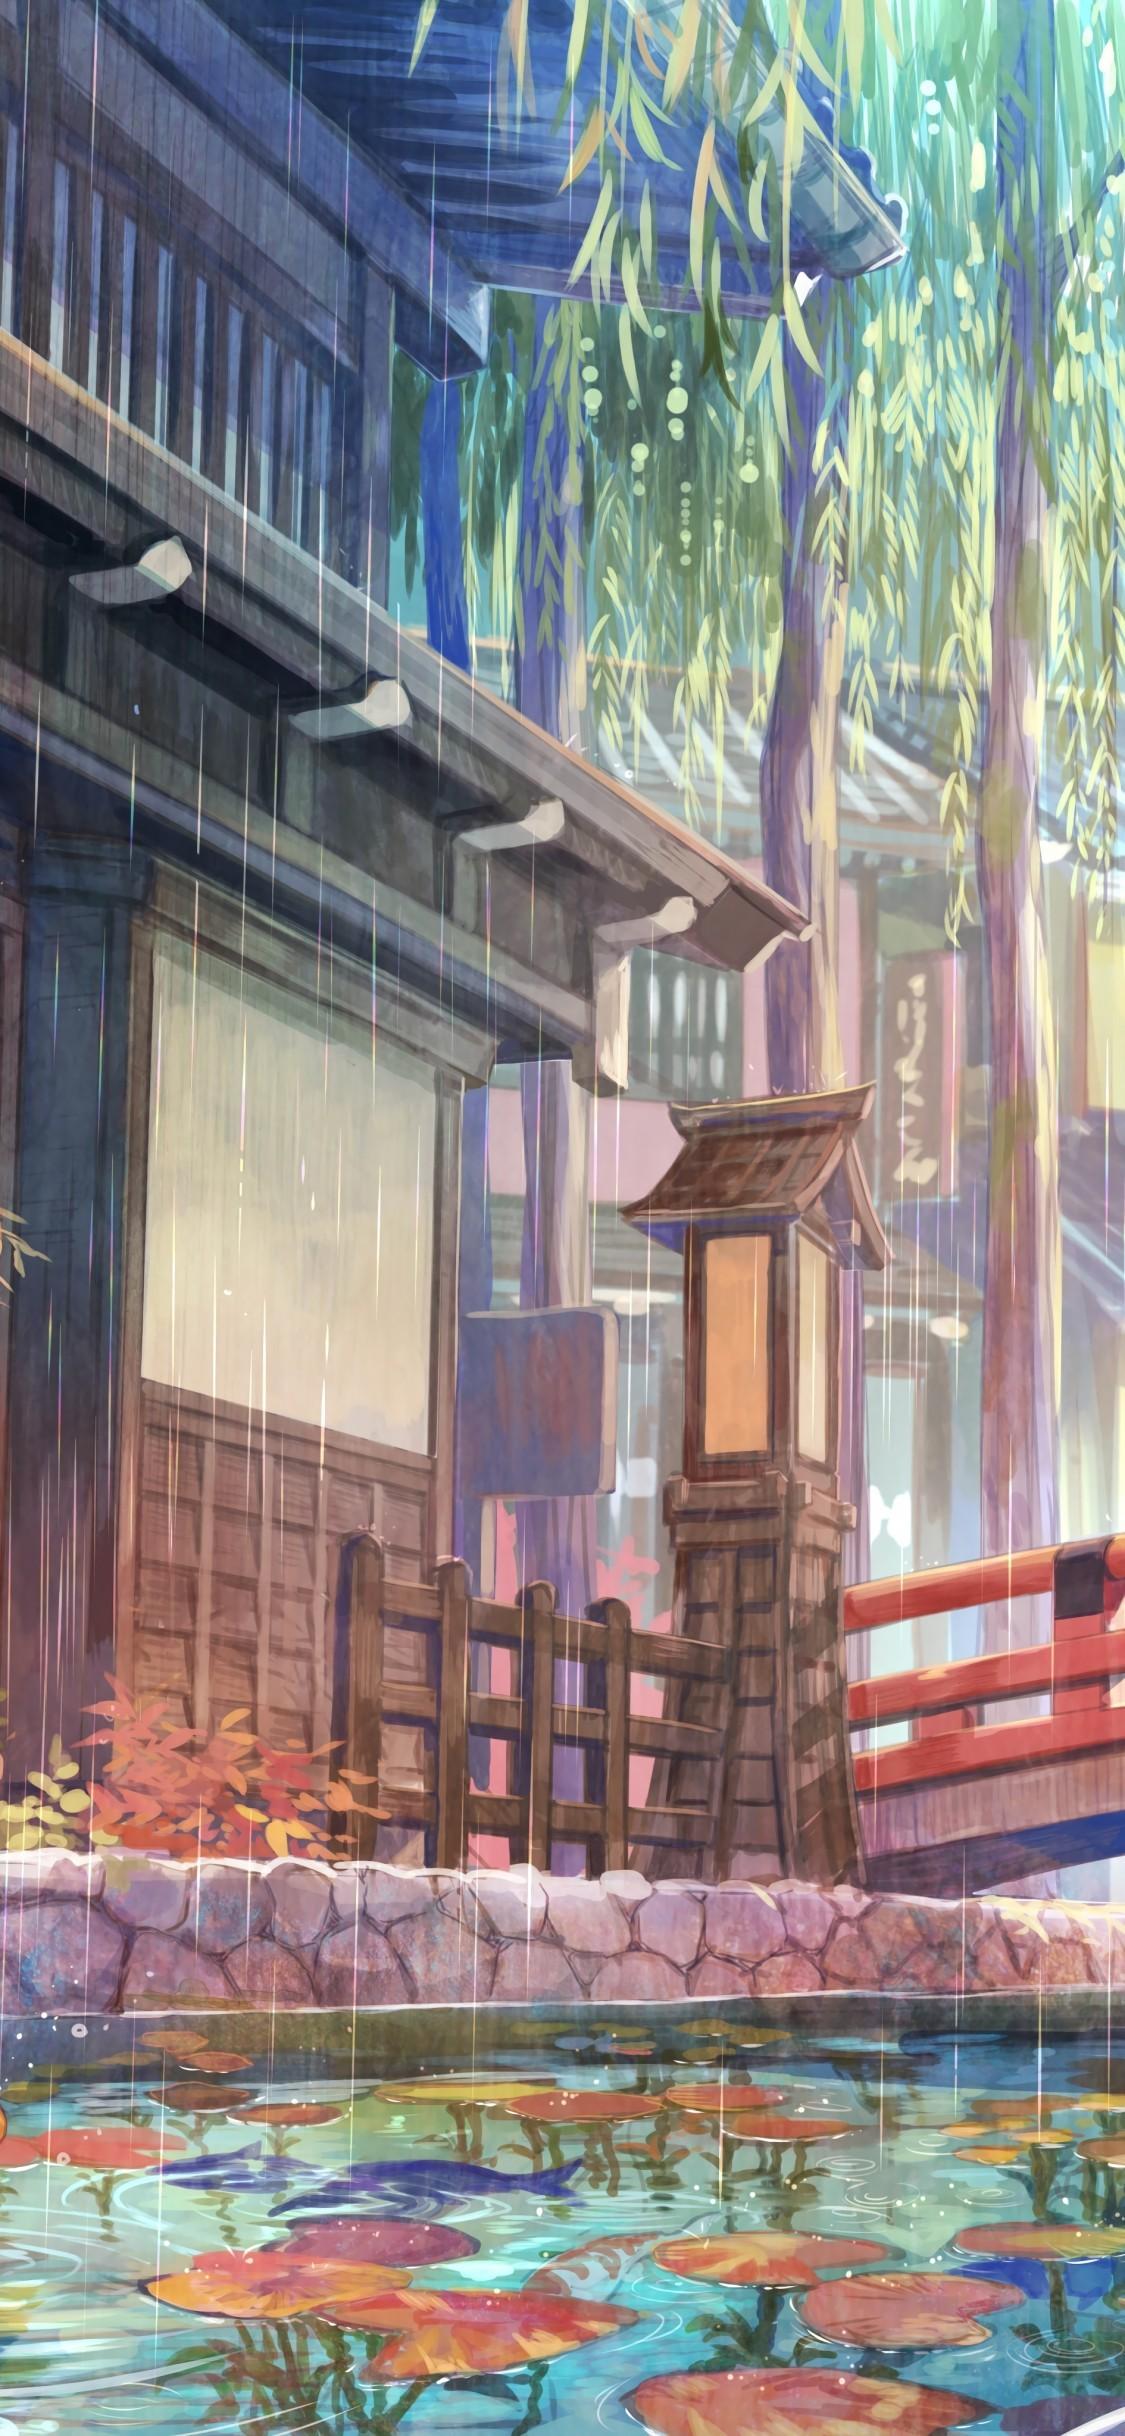 Download 1125x2436 Anime Girl, Kimono, Traditional Japanese House, Water, Raining Wallpaper for iPhone X